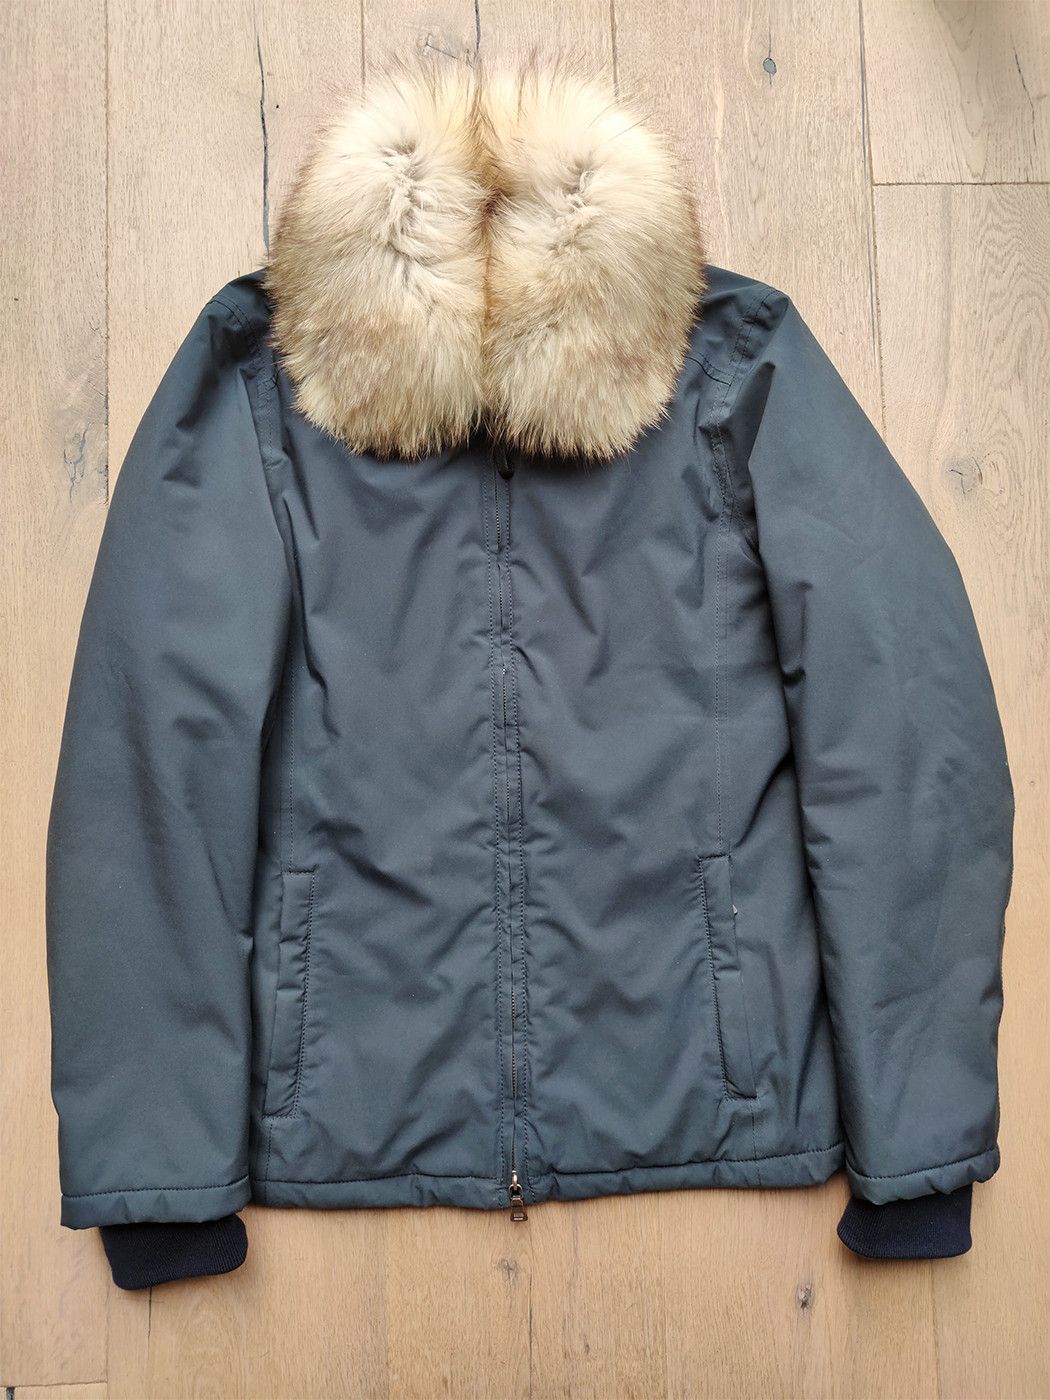 Prada Prada Goretex Fox Fur Jacket | Grailed